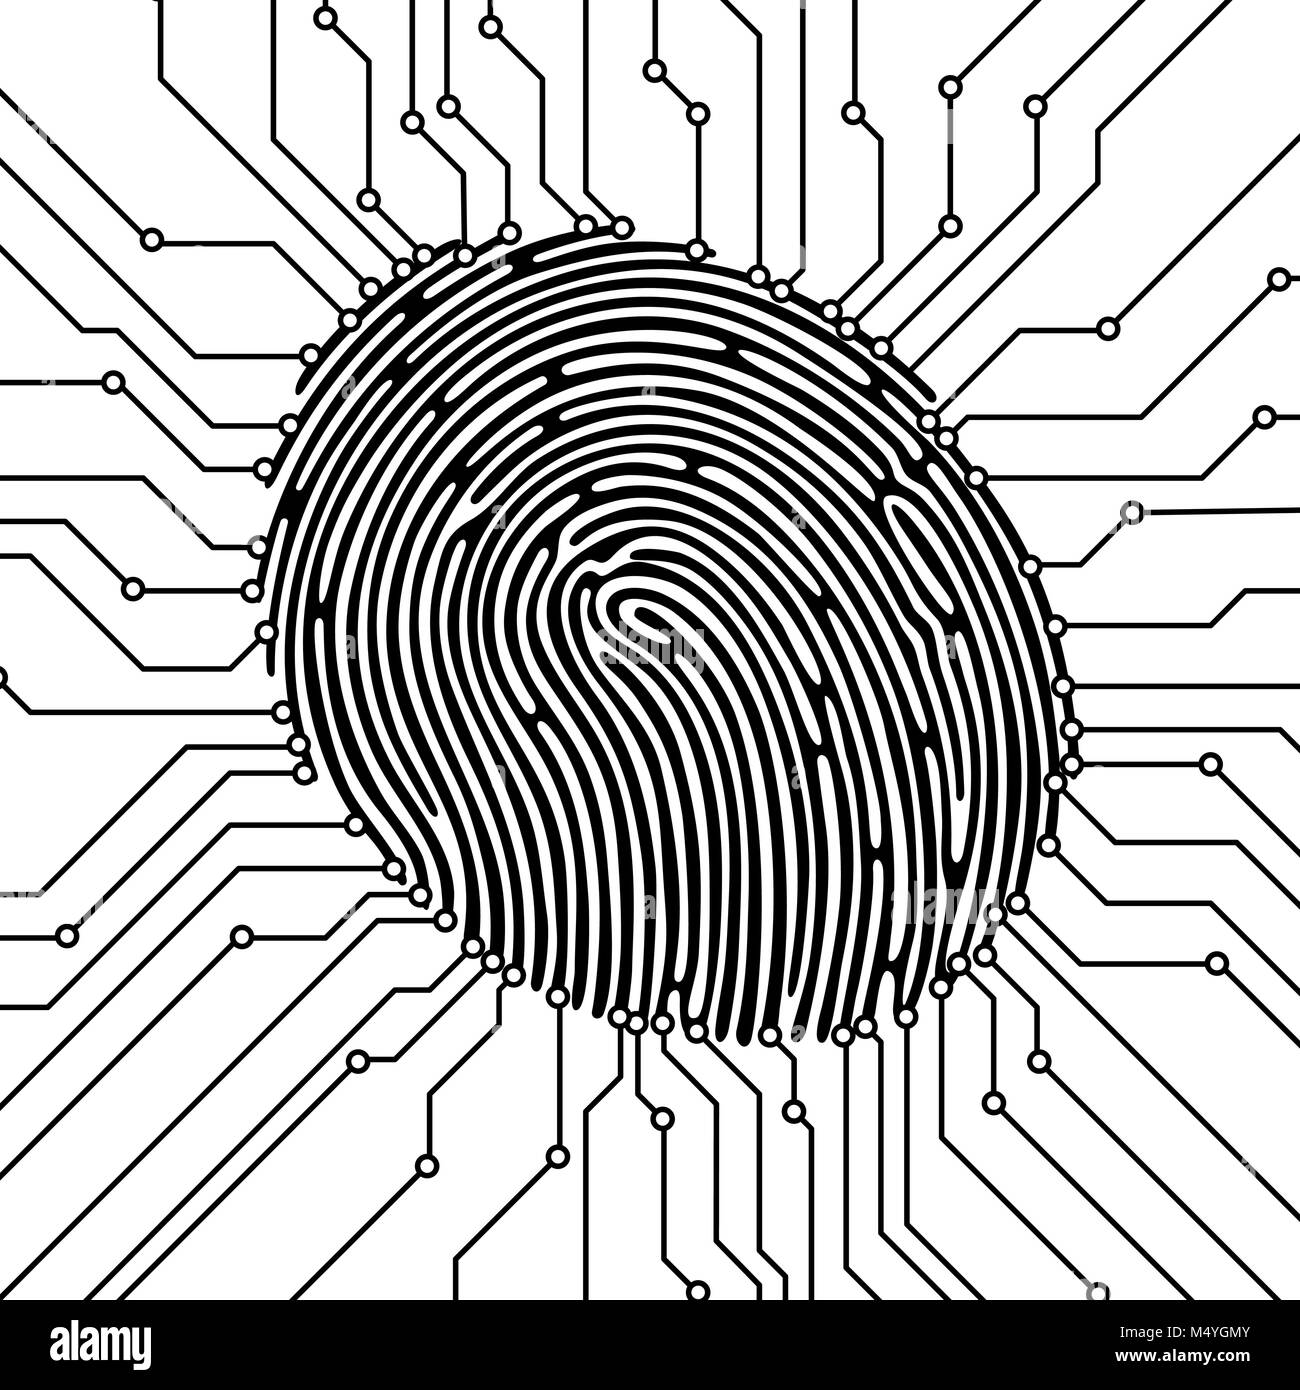 Fingerprint scan illustration. Security concept. Biometric identification. Vector illustration. Stock Vector